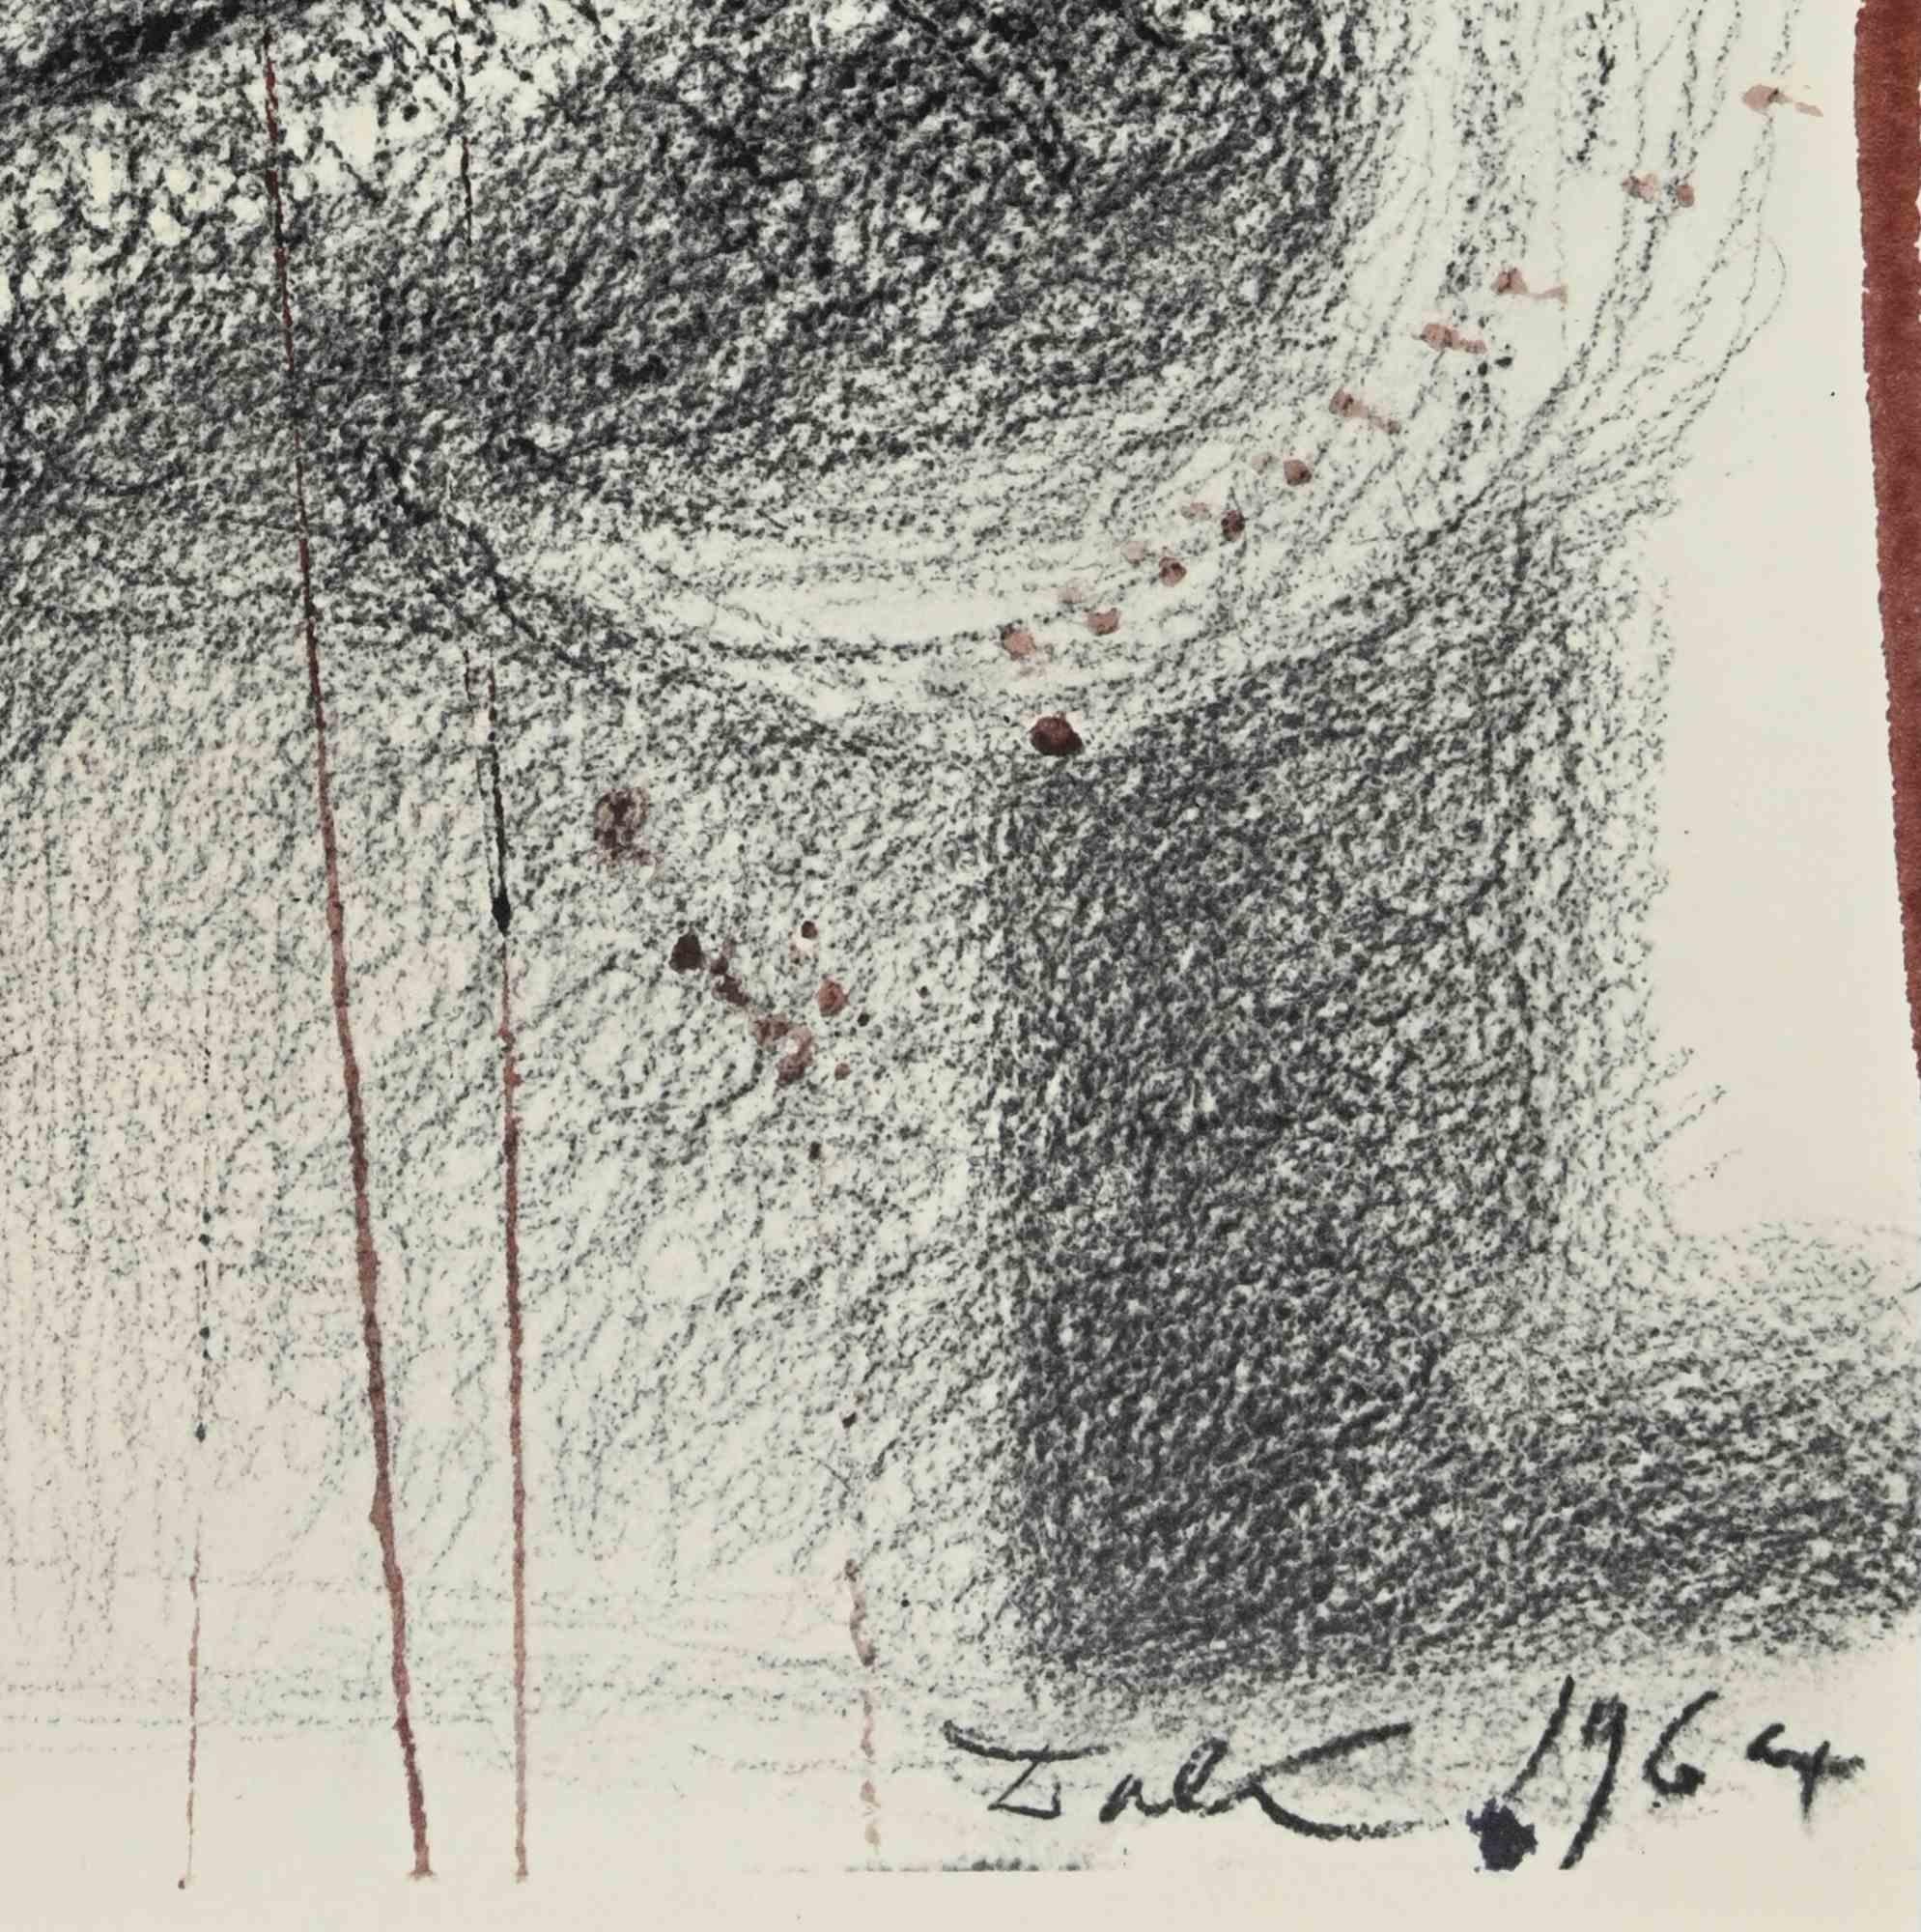 Sedet Sola Civitas Plena Populo - Lithograph - 1964 - Print by Salvador Dalí